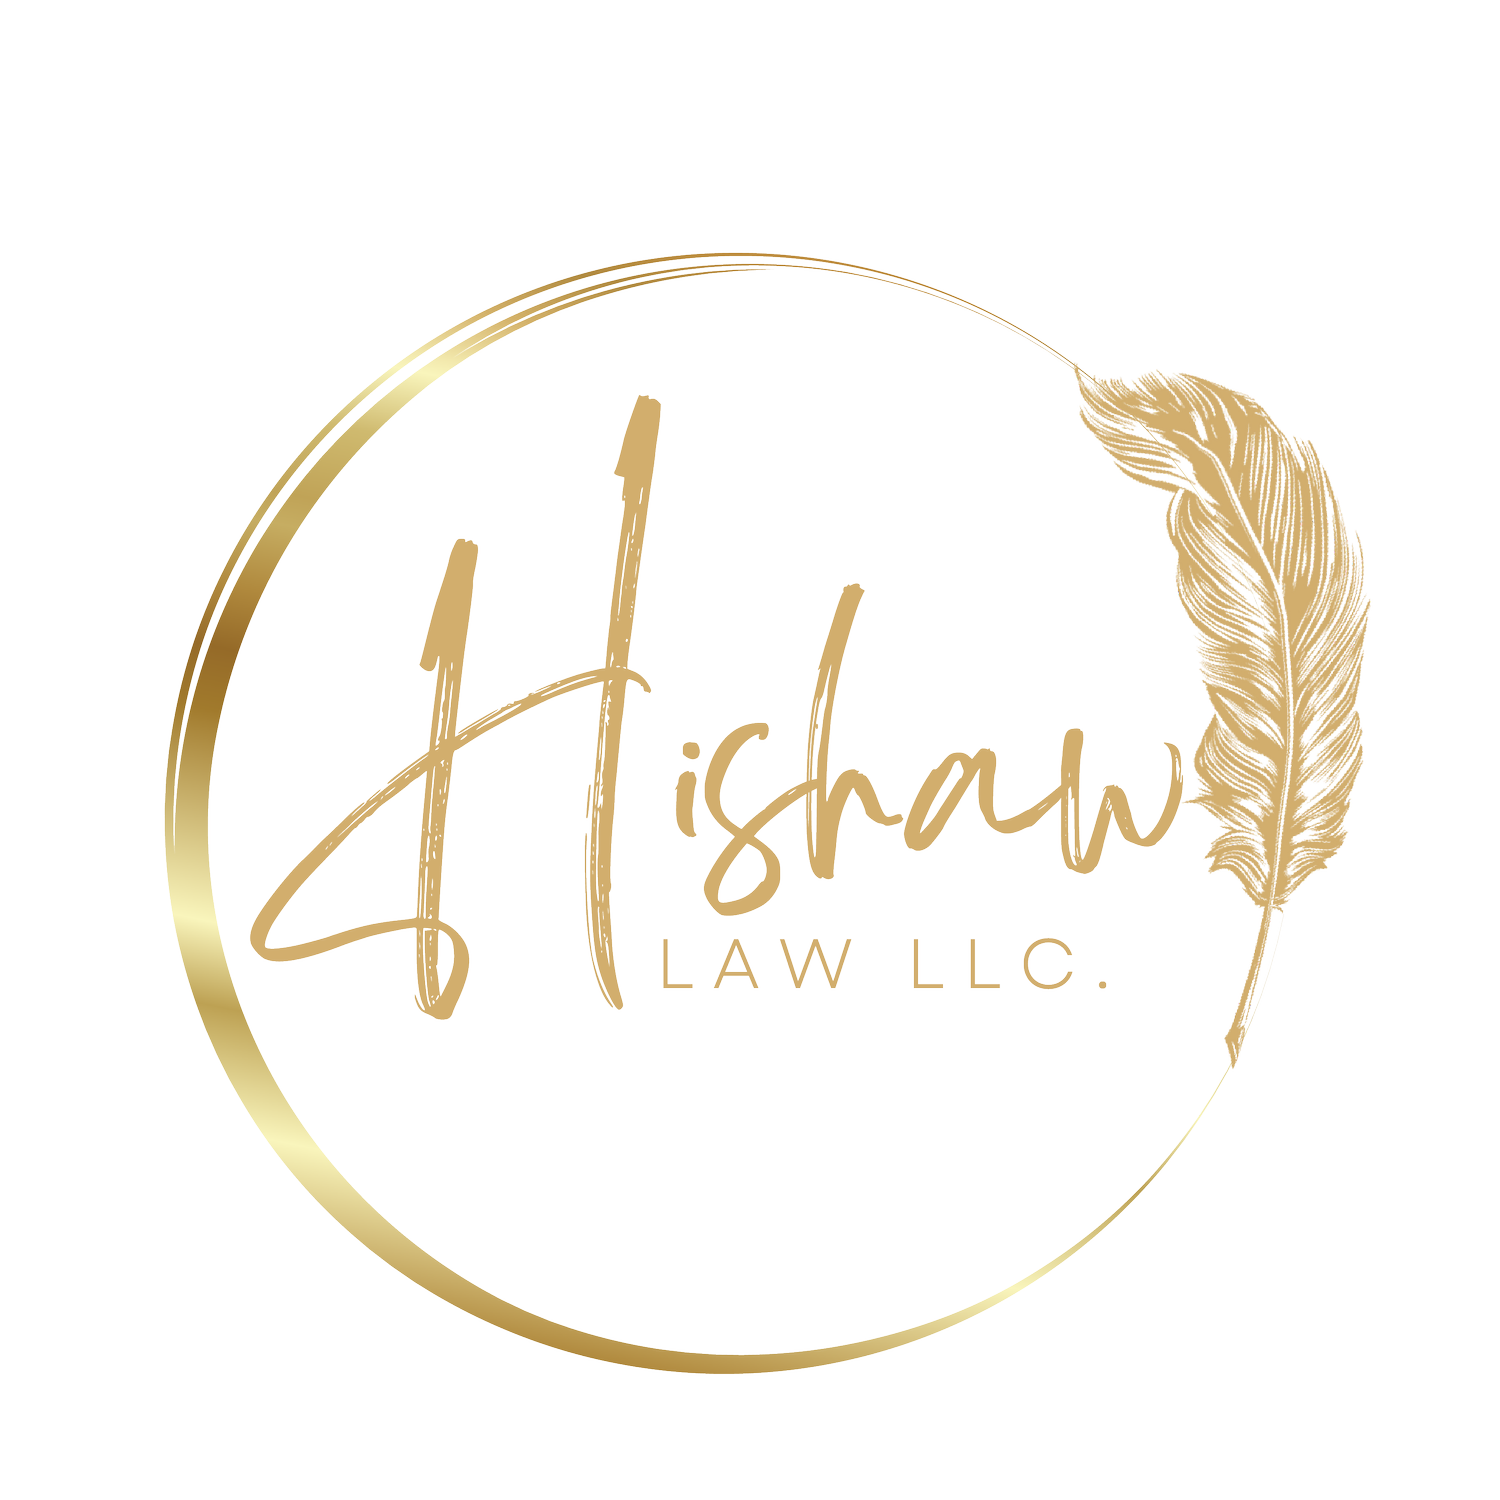 HISHAW LAW LLC.